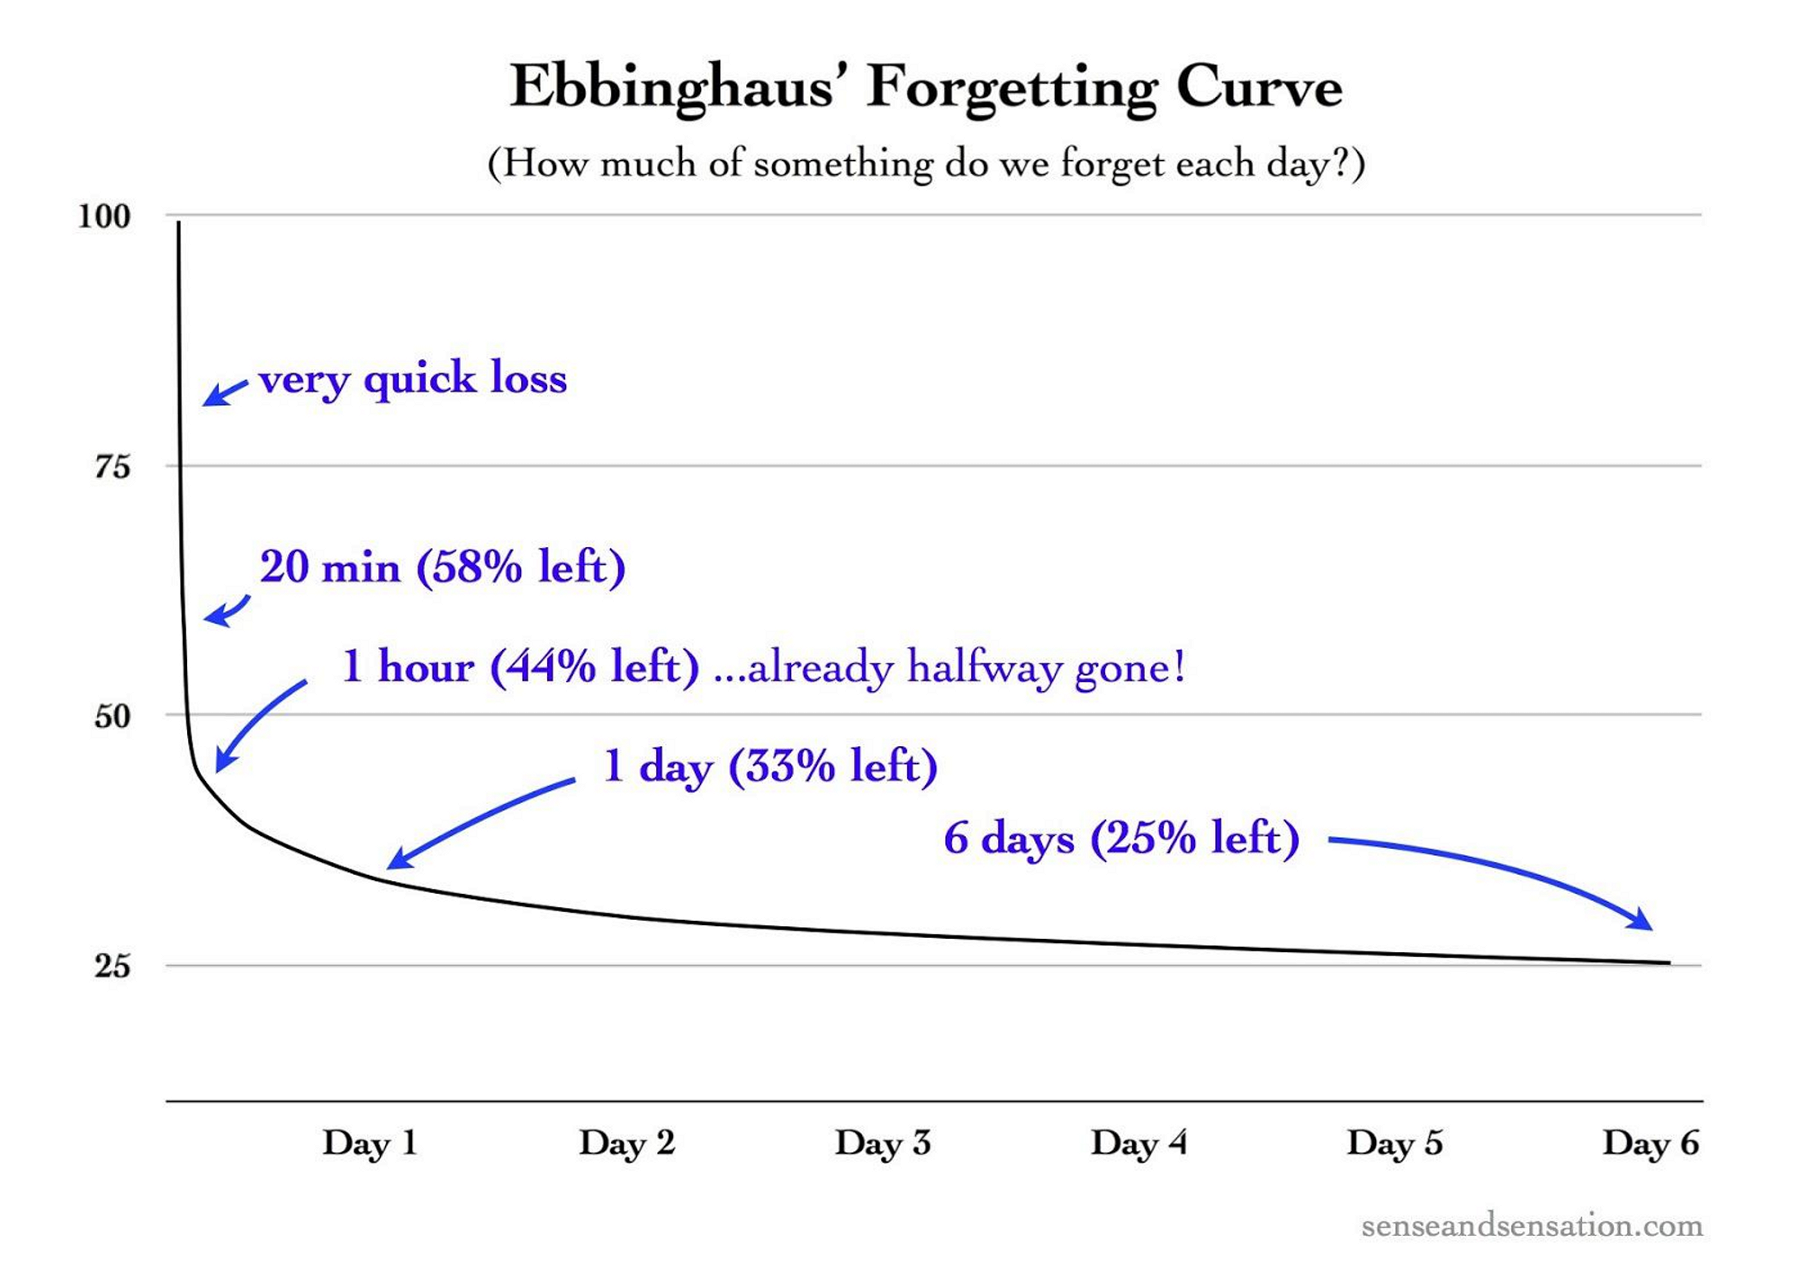 Ebbinghau's Forgetting Curve